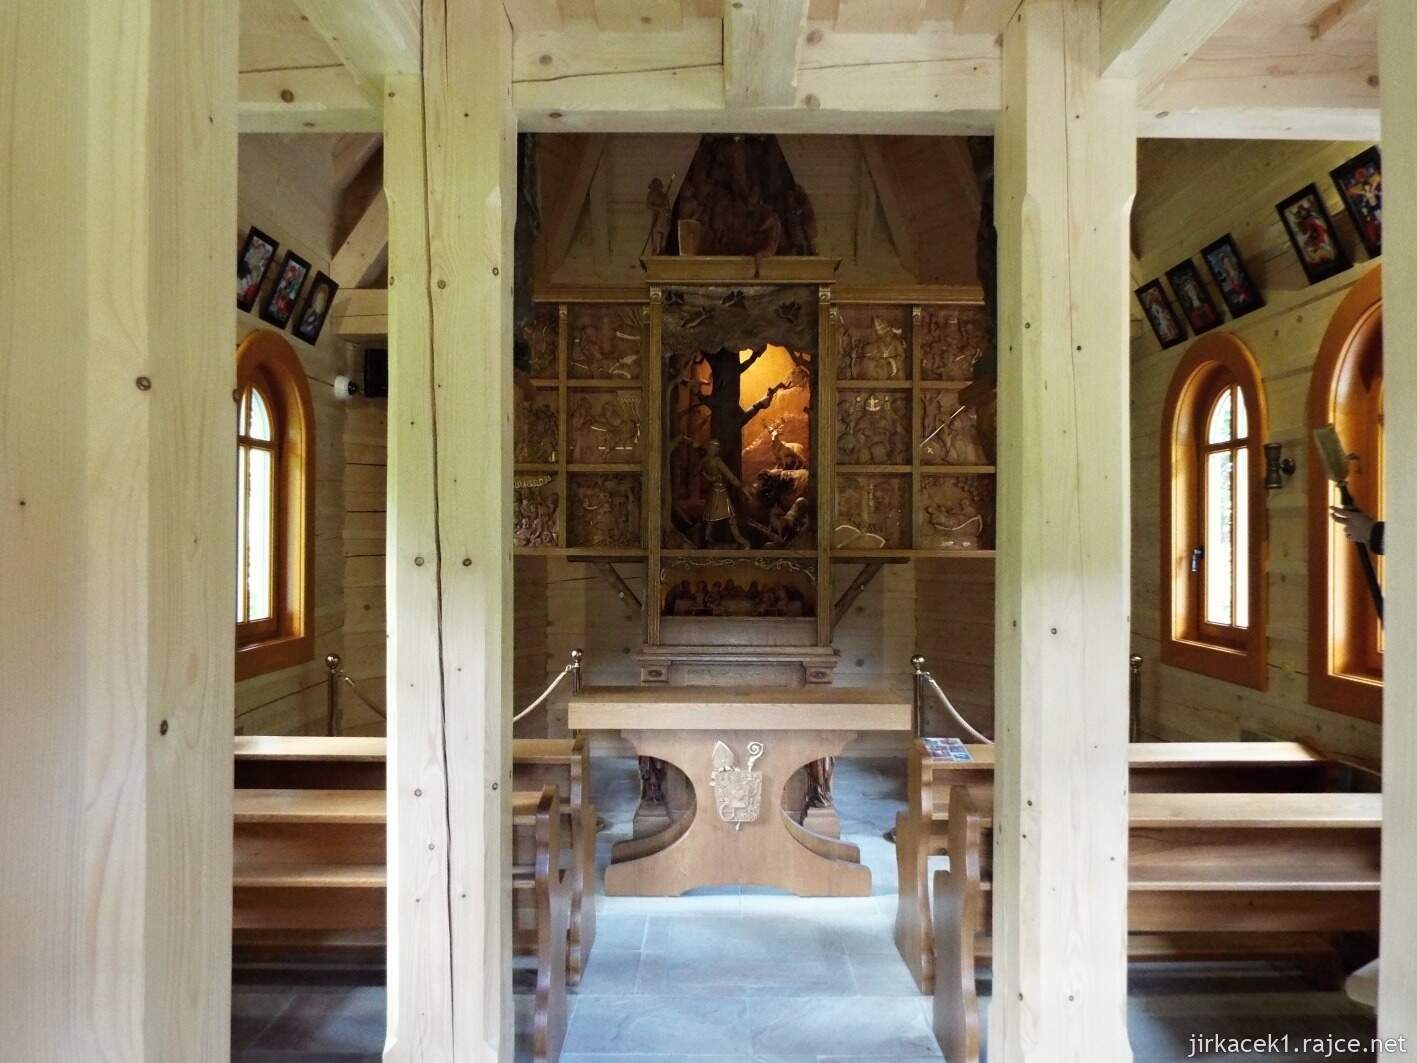 028 - Velké Karlovice - kaple sv. Huberta v Pluskovci 12 - interiér kaple